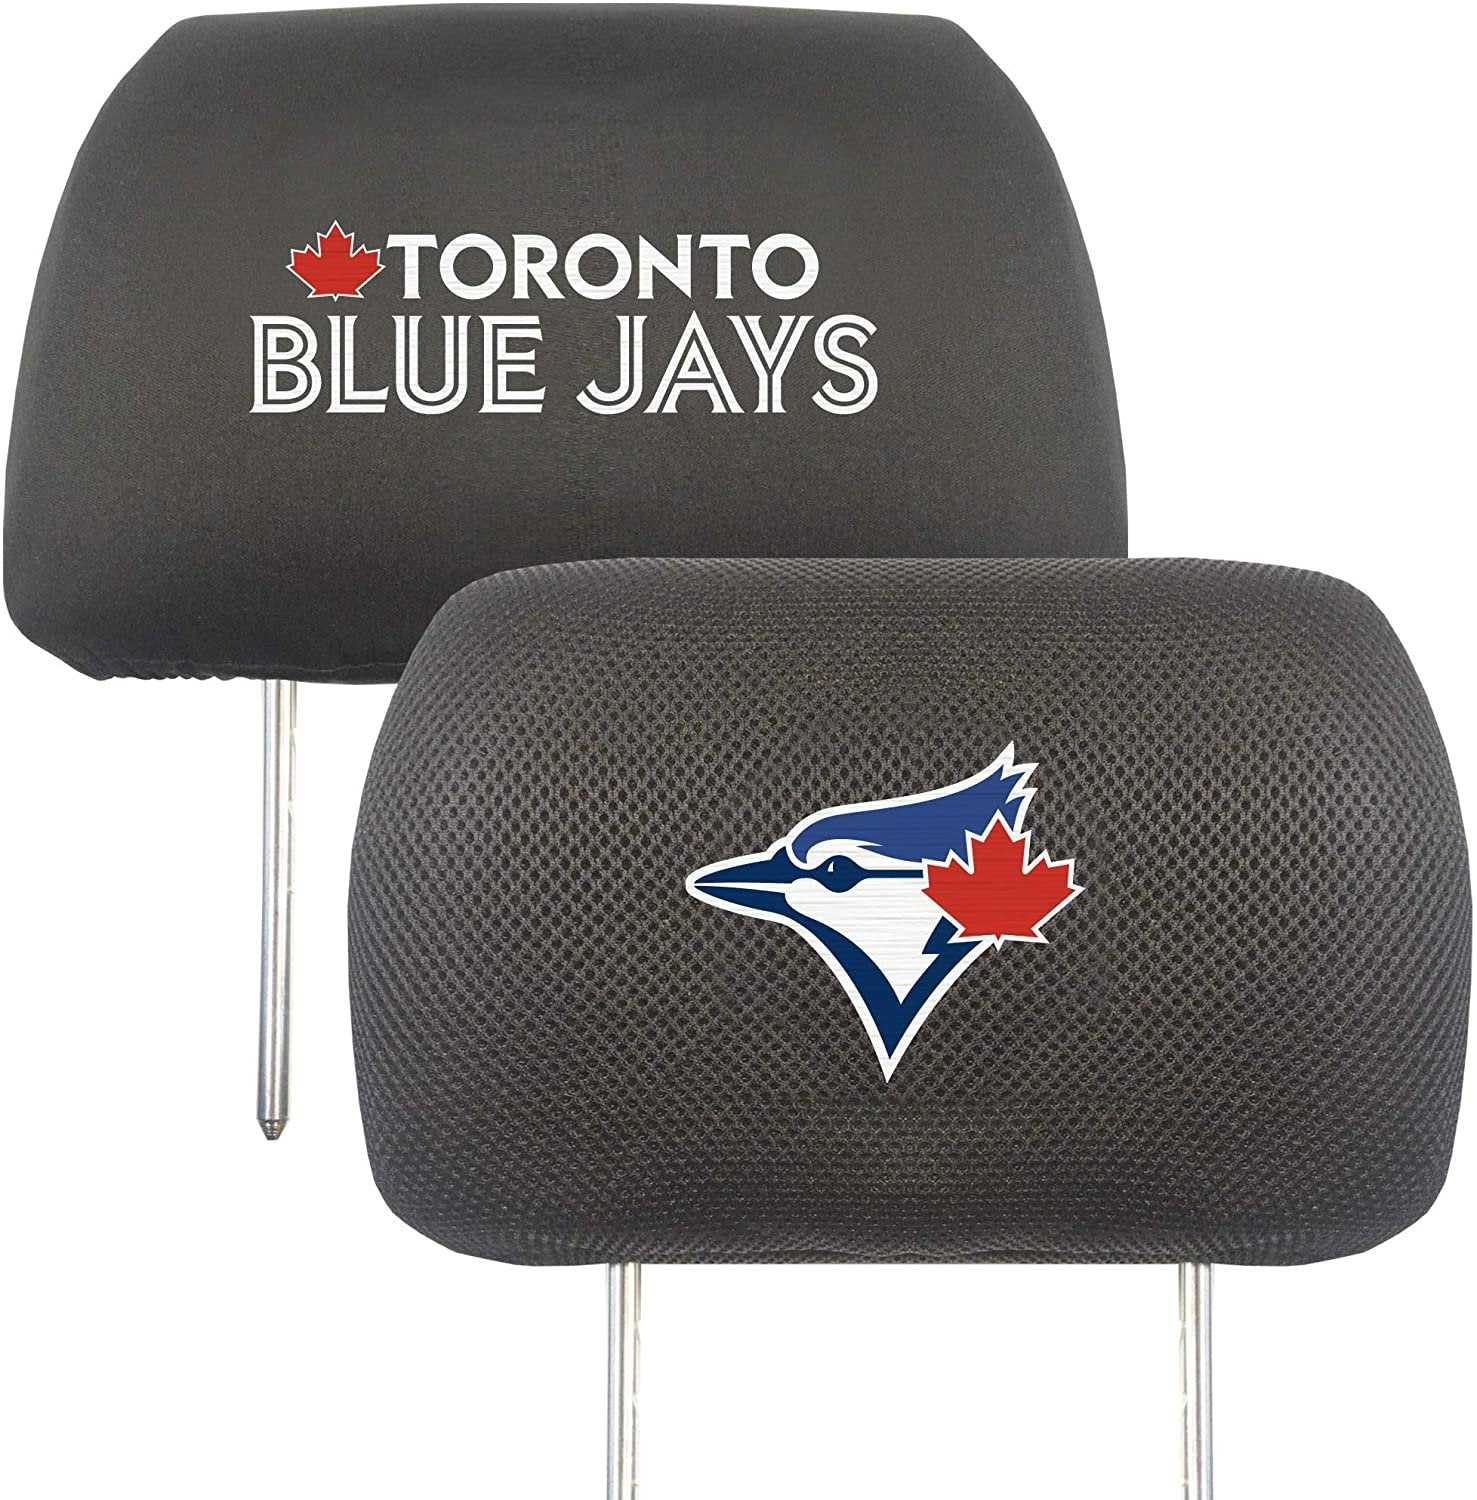 Toronto Blue Jays Pair of Premium Auto Head Rest Covers, Embroidered, Black Elastic, 14x10 Inch